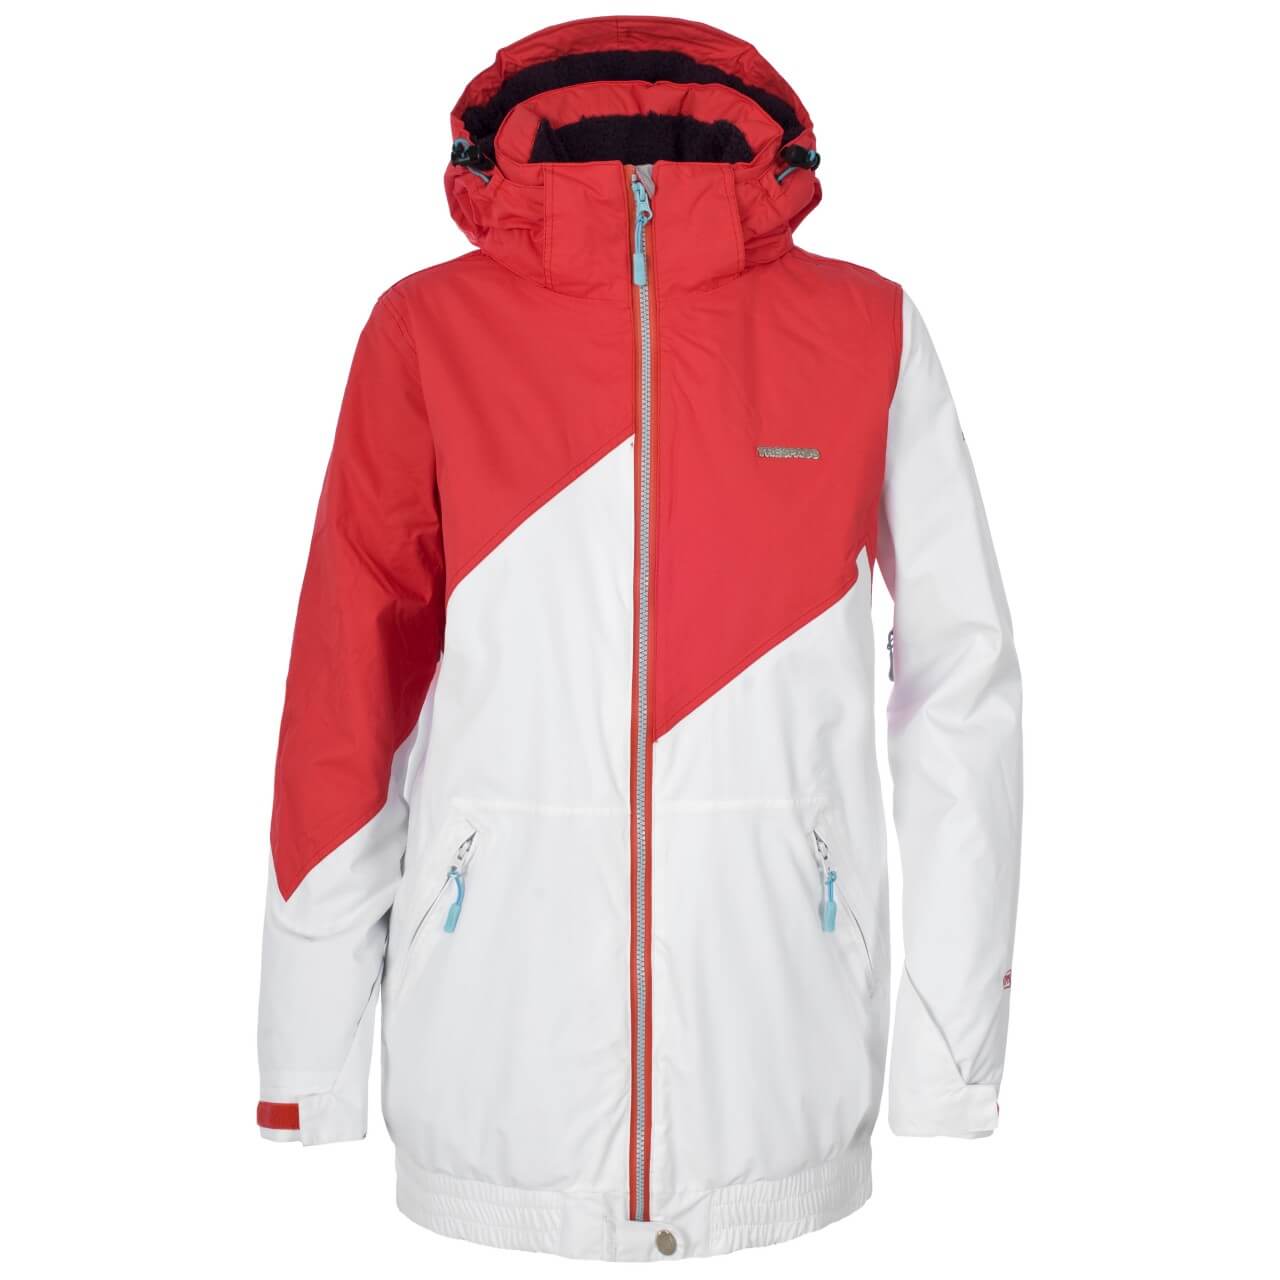 Trespass ski jacket